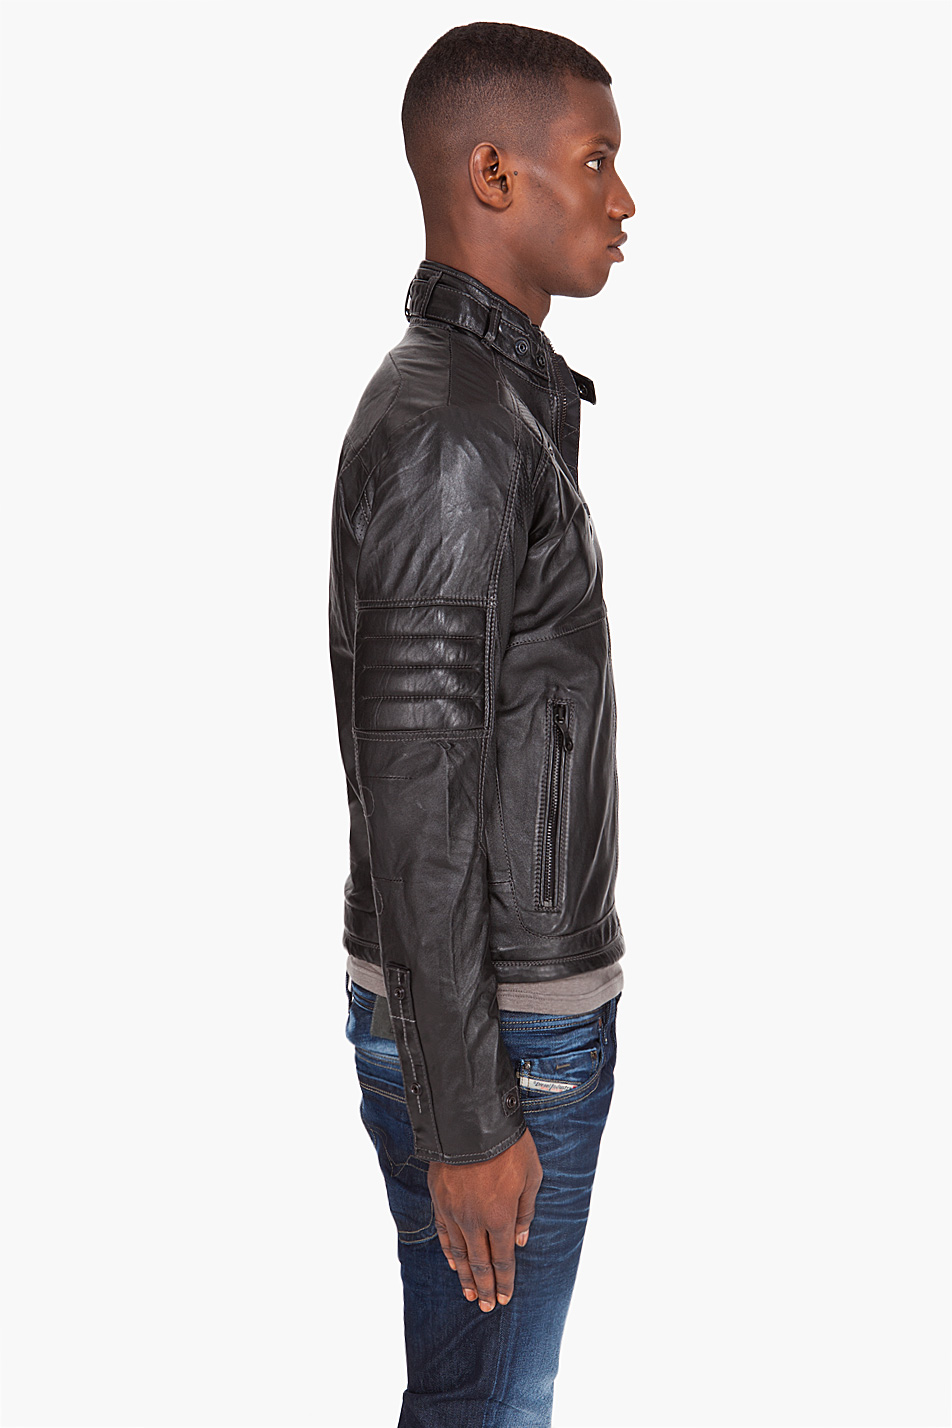 G-Star RAW Mfd Leather Jacket in Black 